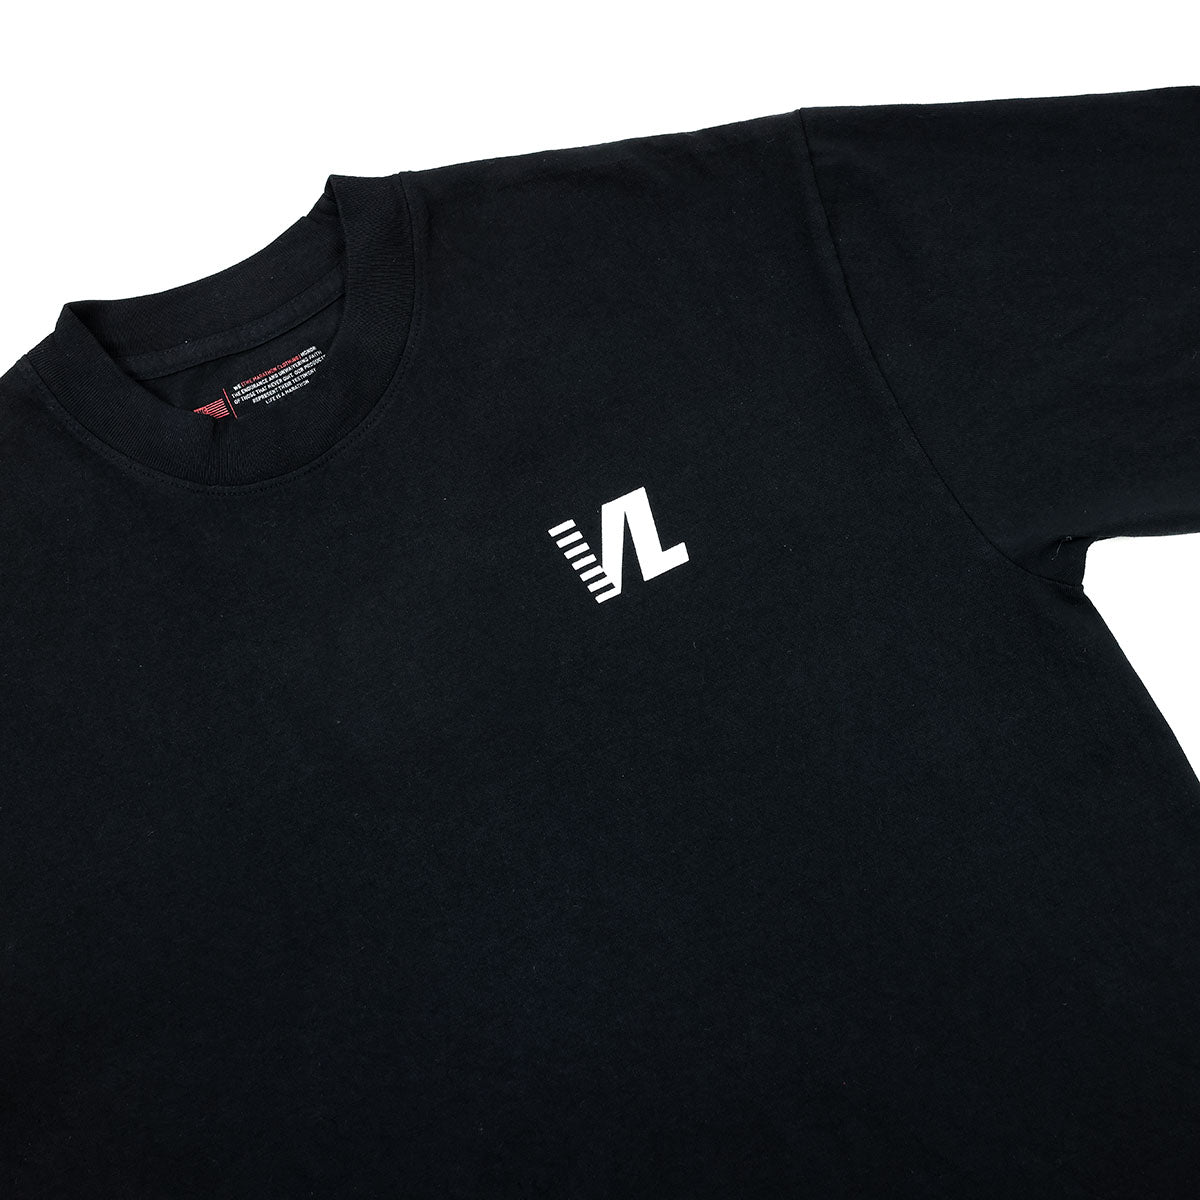 Victory Lap VL T-Shirt - Black/White - Chest Detail